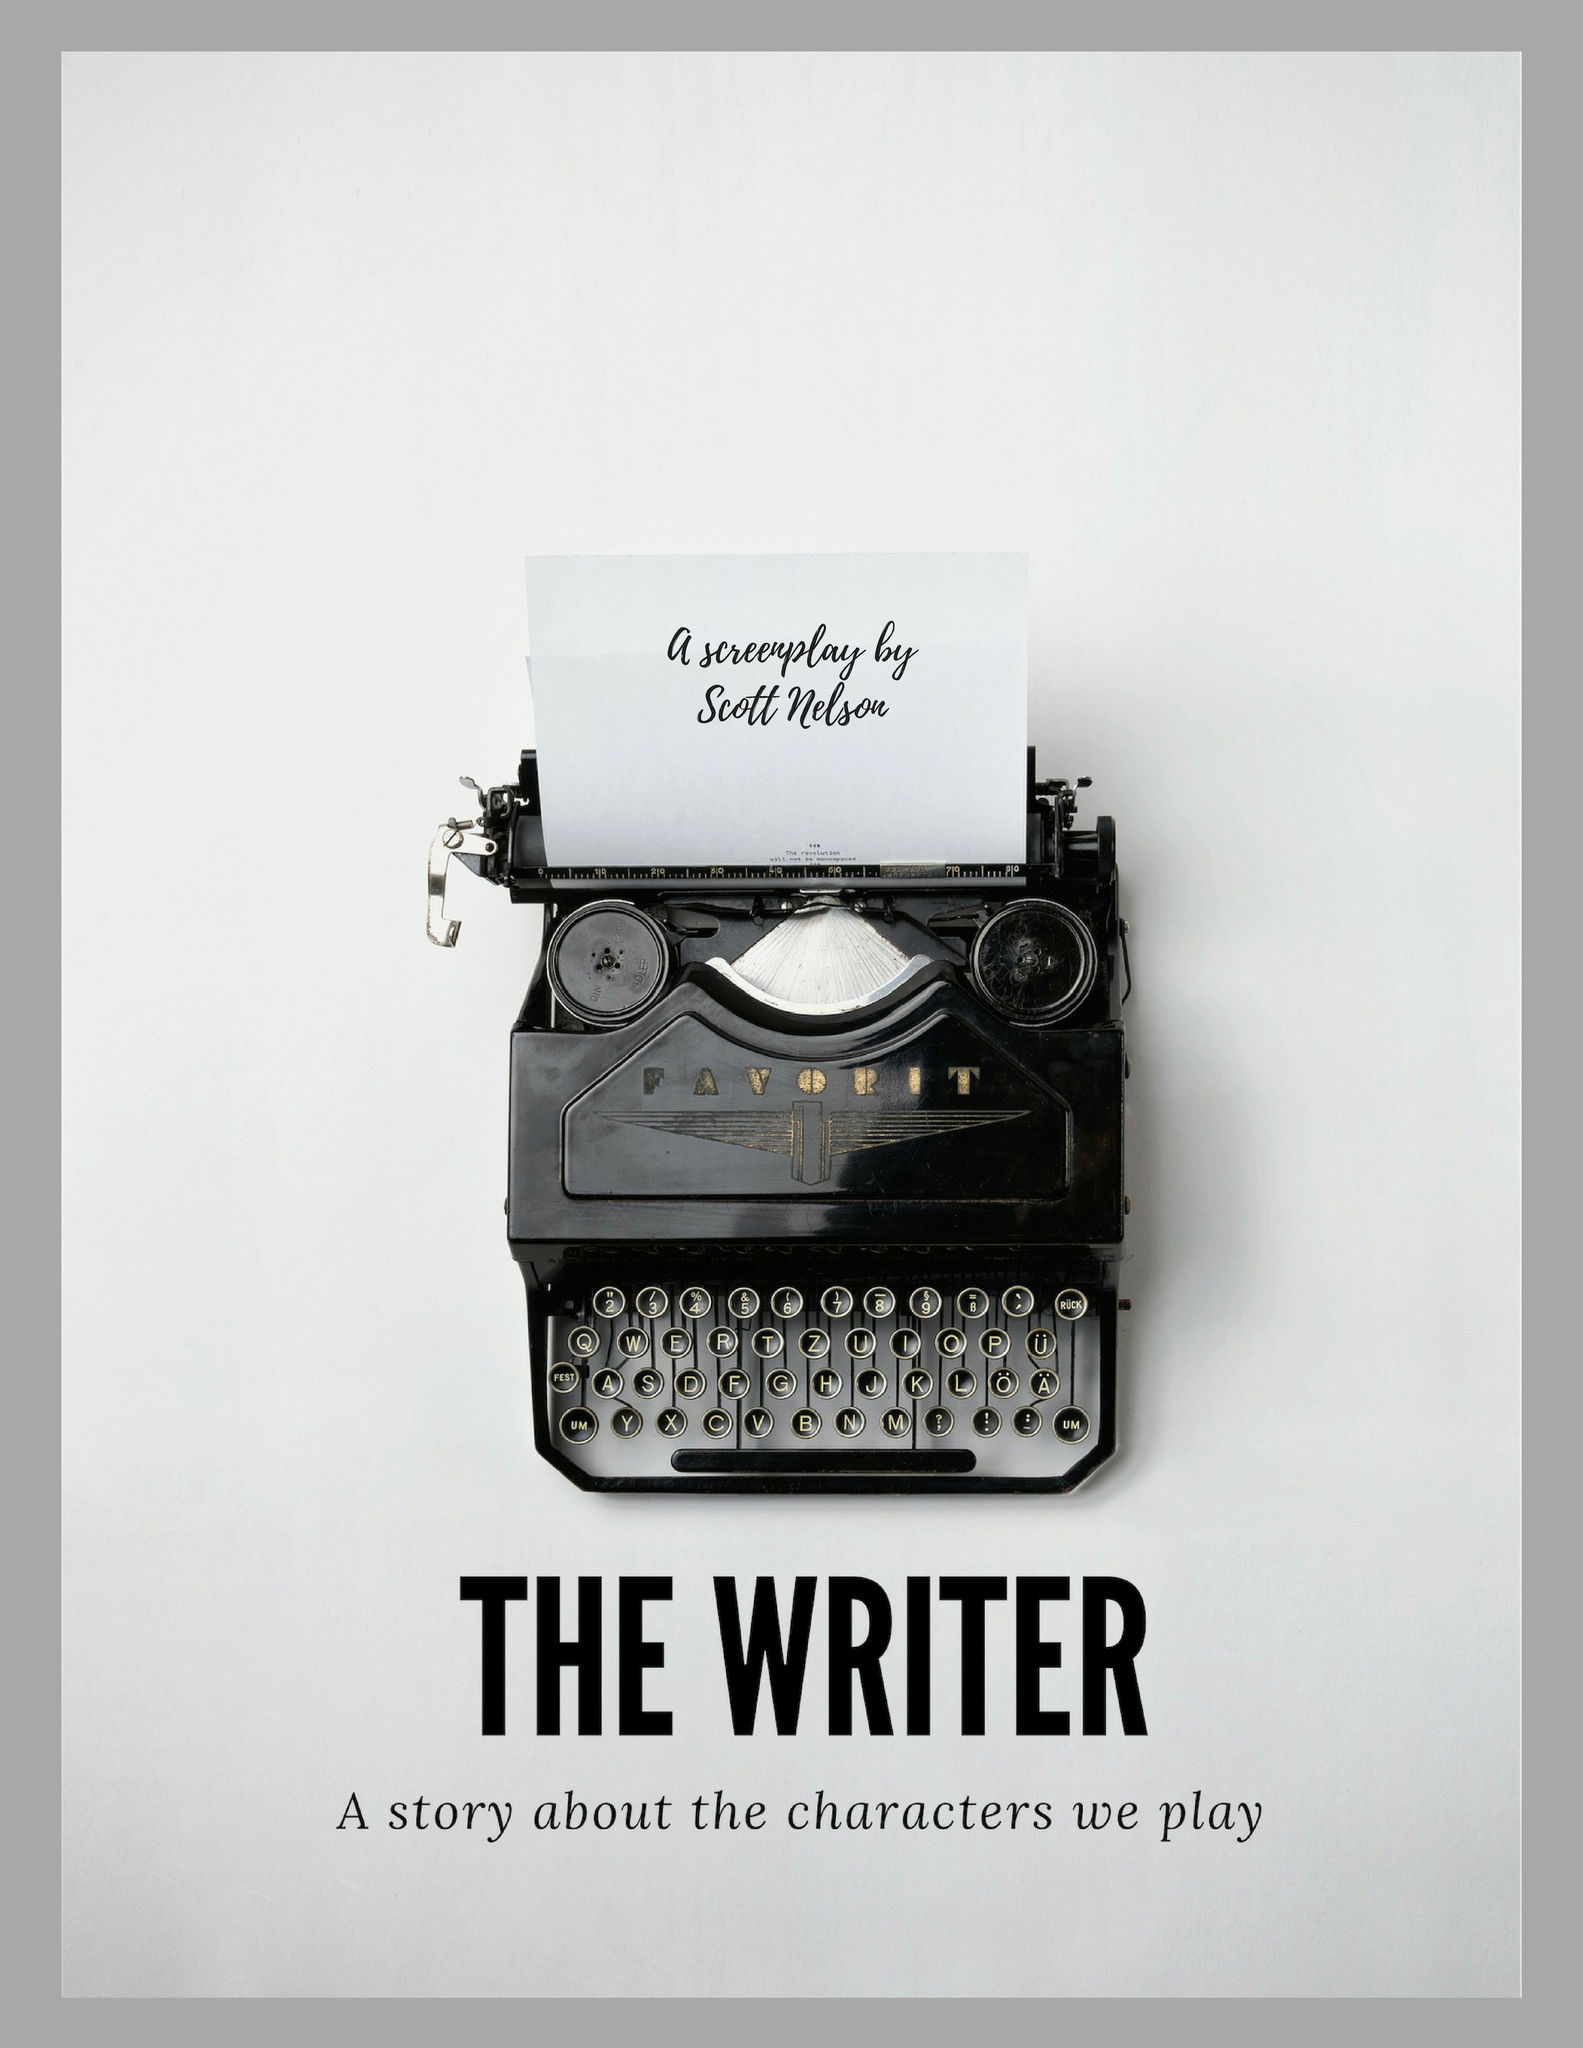 THE WRITER